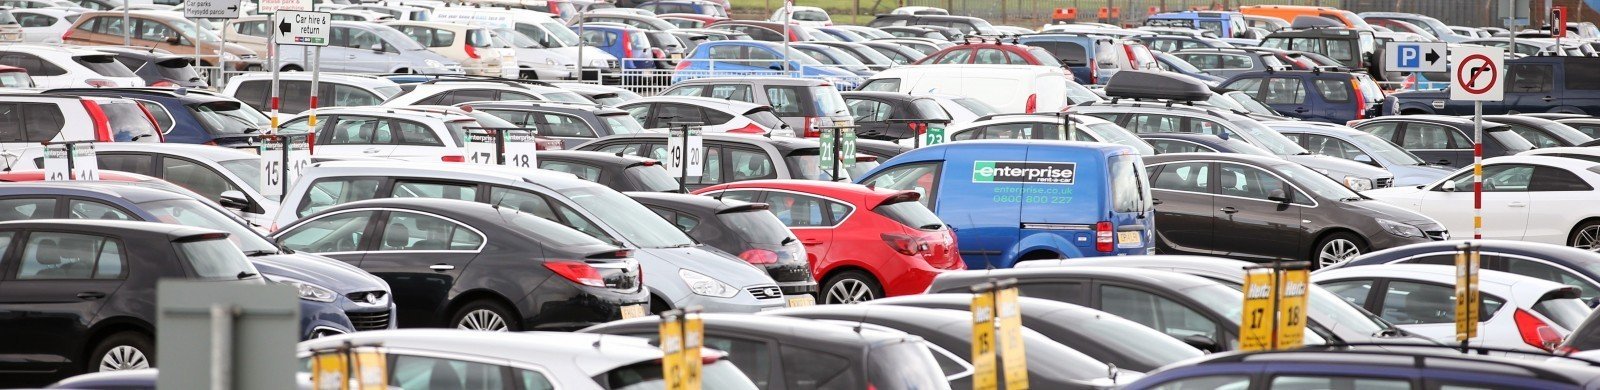 Highwayman Parking  Cheaper Car Parking near Cardiff Airport